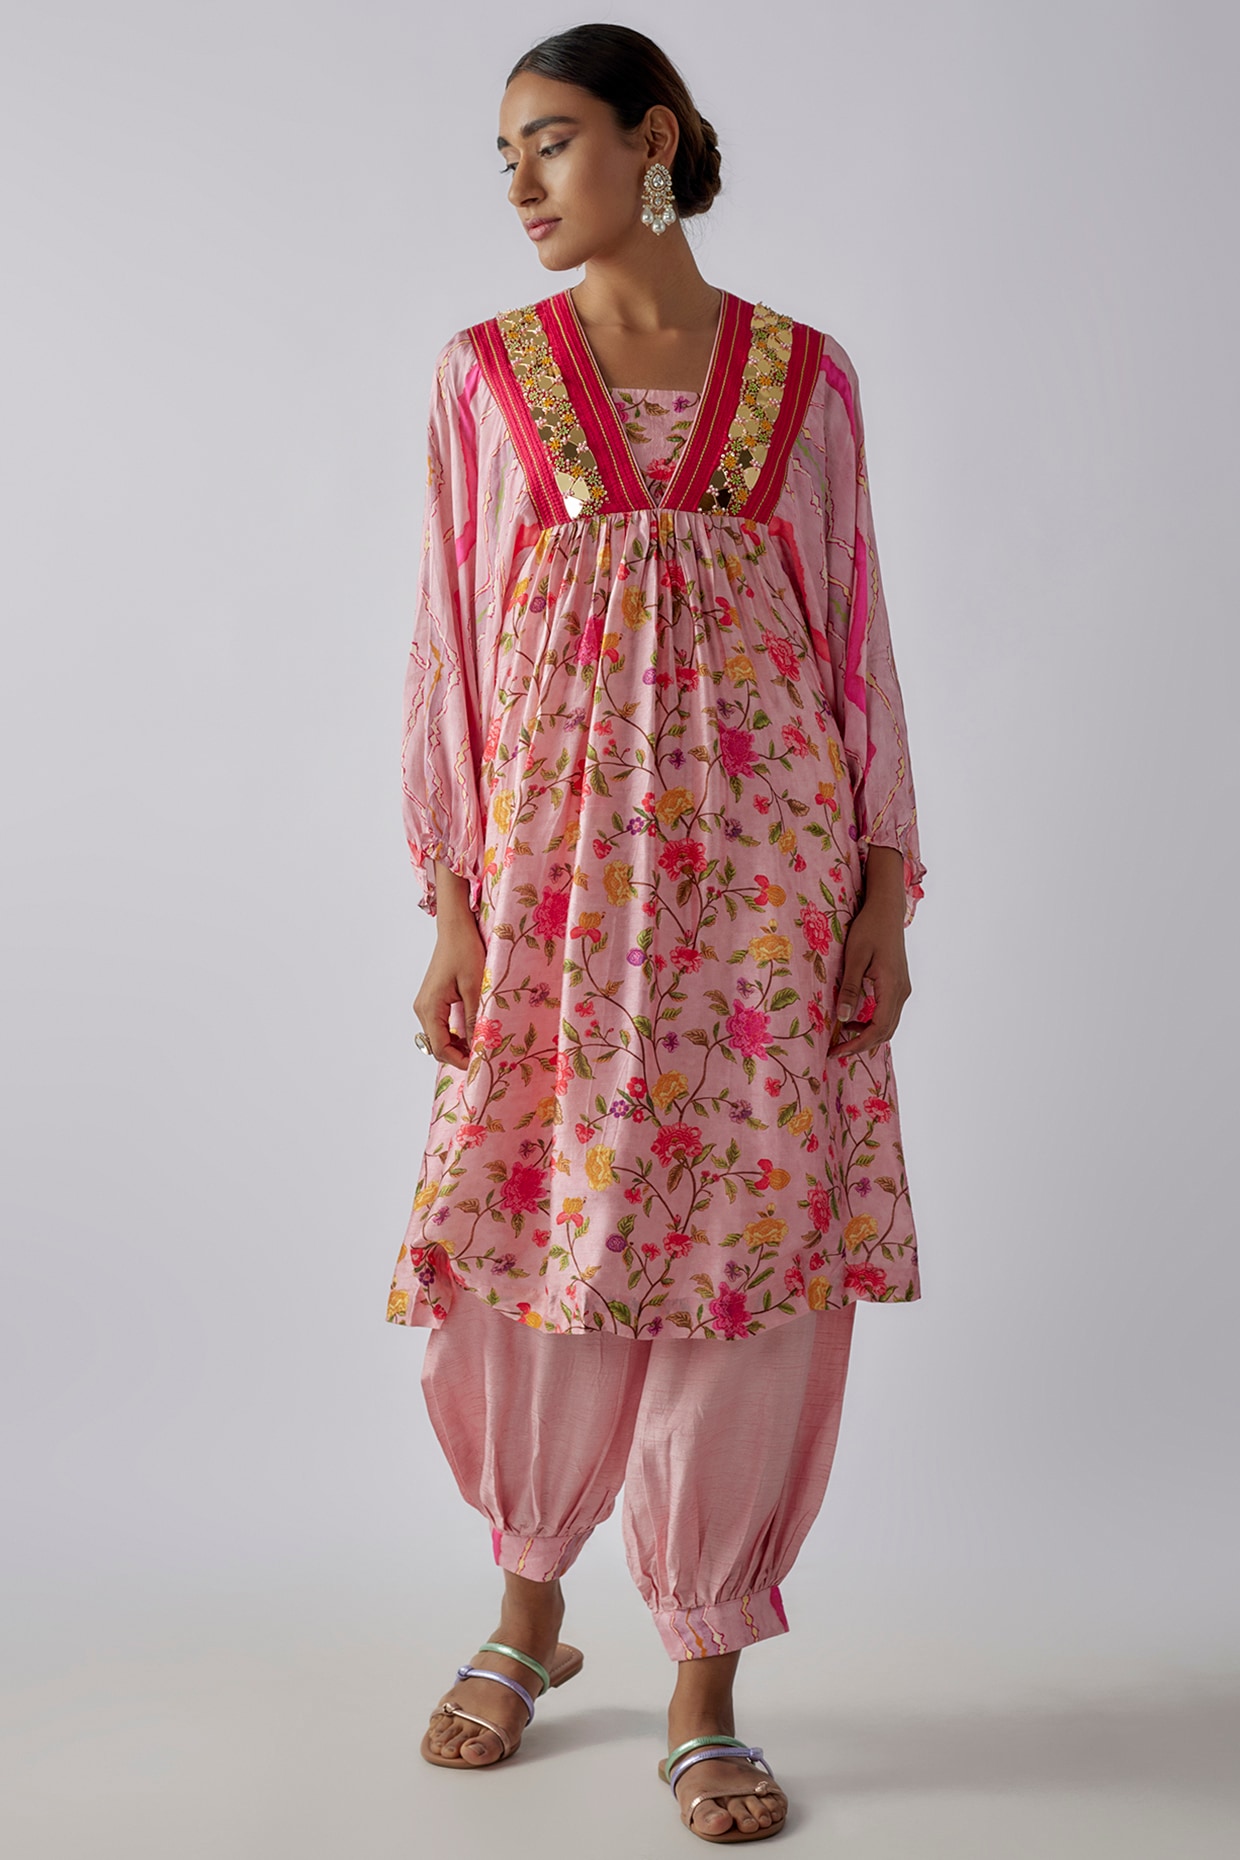 Hot Pink Lehenga Choli Wedding Lacha Suit Dress Sequins Lehenga Kameez  SariSaree | eBay